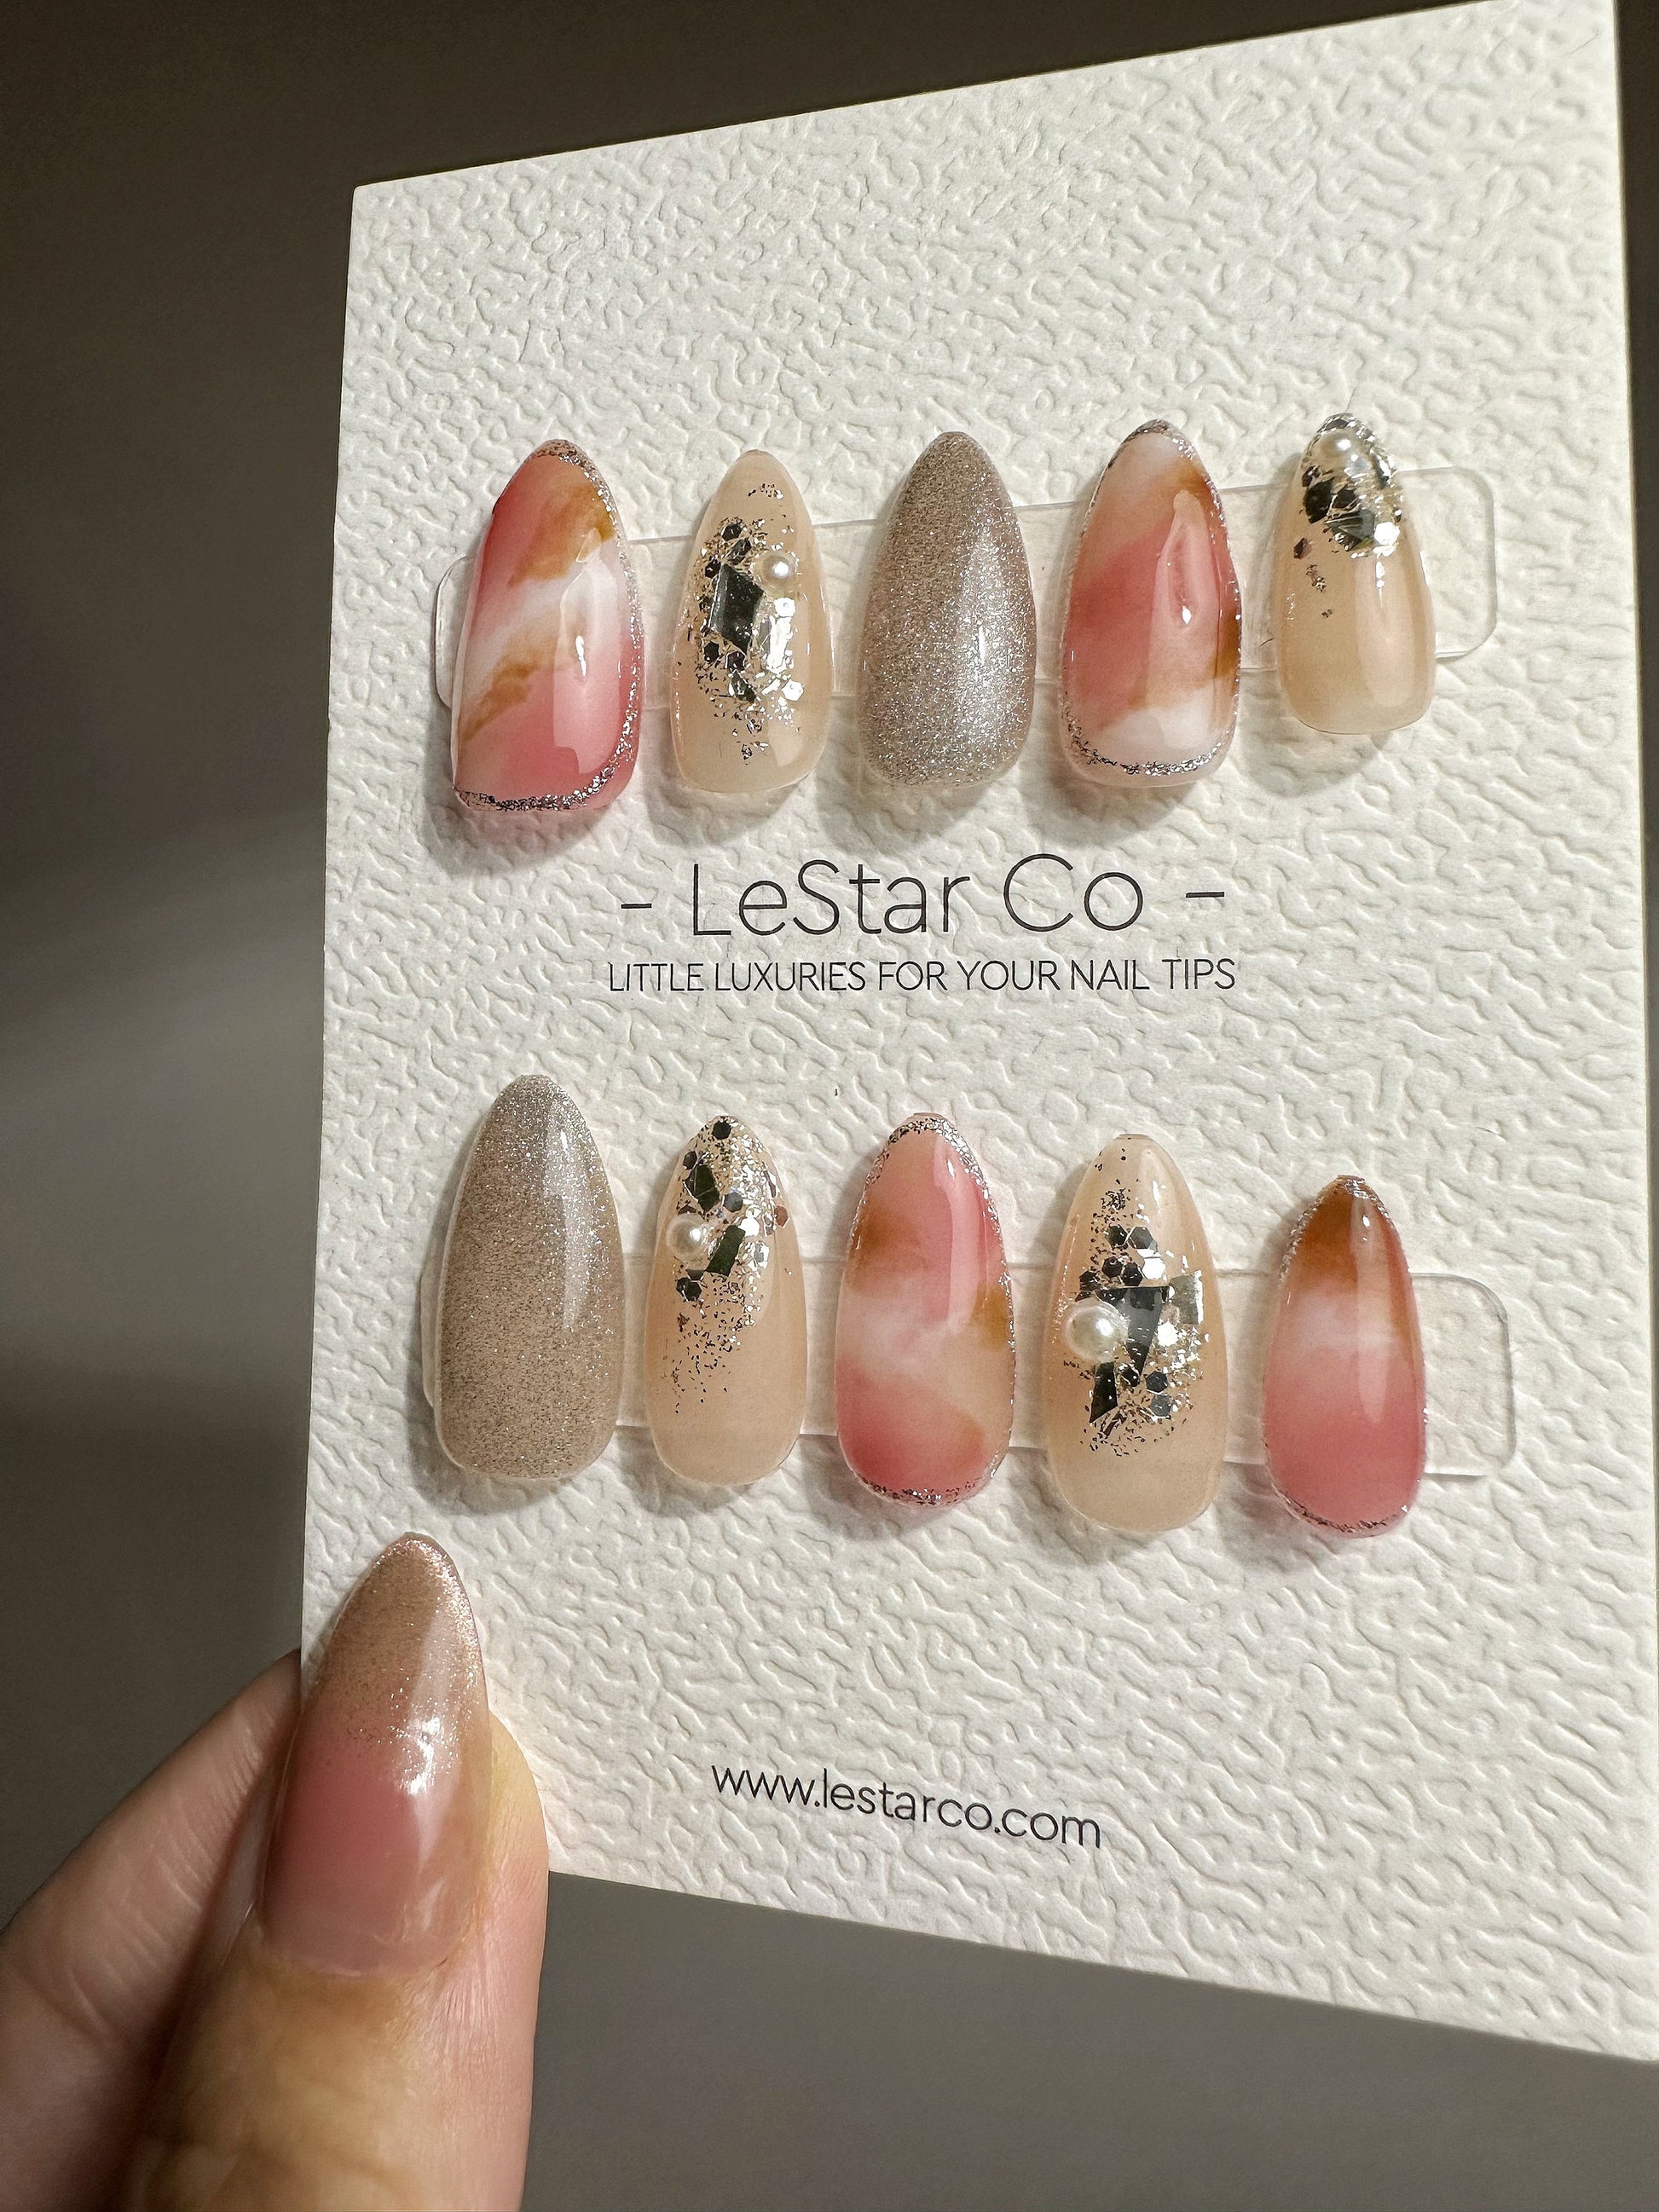 Reusable Rose Rocks Pink Ombre | Premium Press on Nails Gel | Fake Nails | Cute Fun Colorful Gel Nail Artist faux nails BB406